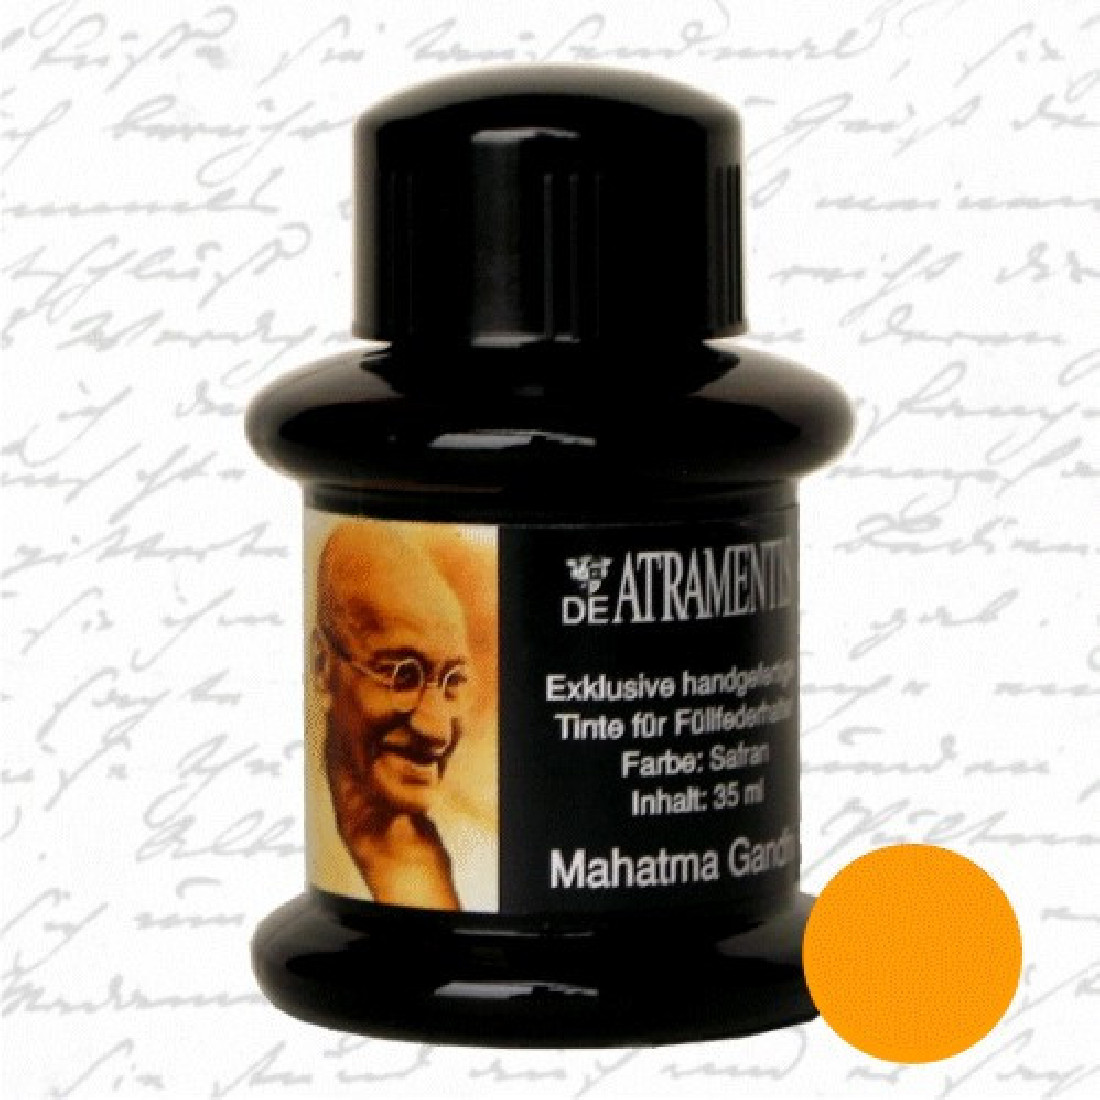 De Atramentis Mahatma Gandhi 45ml fountain pen ink